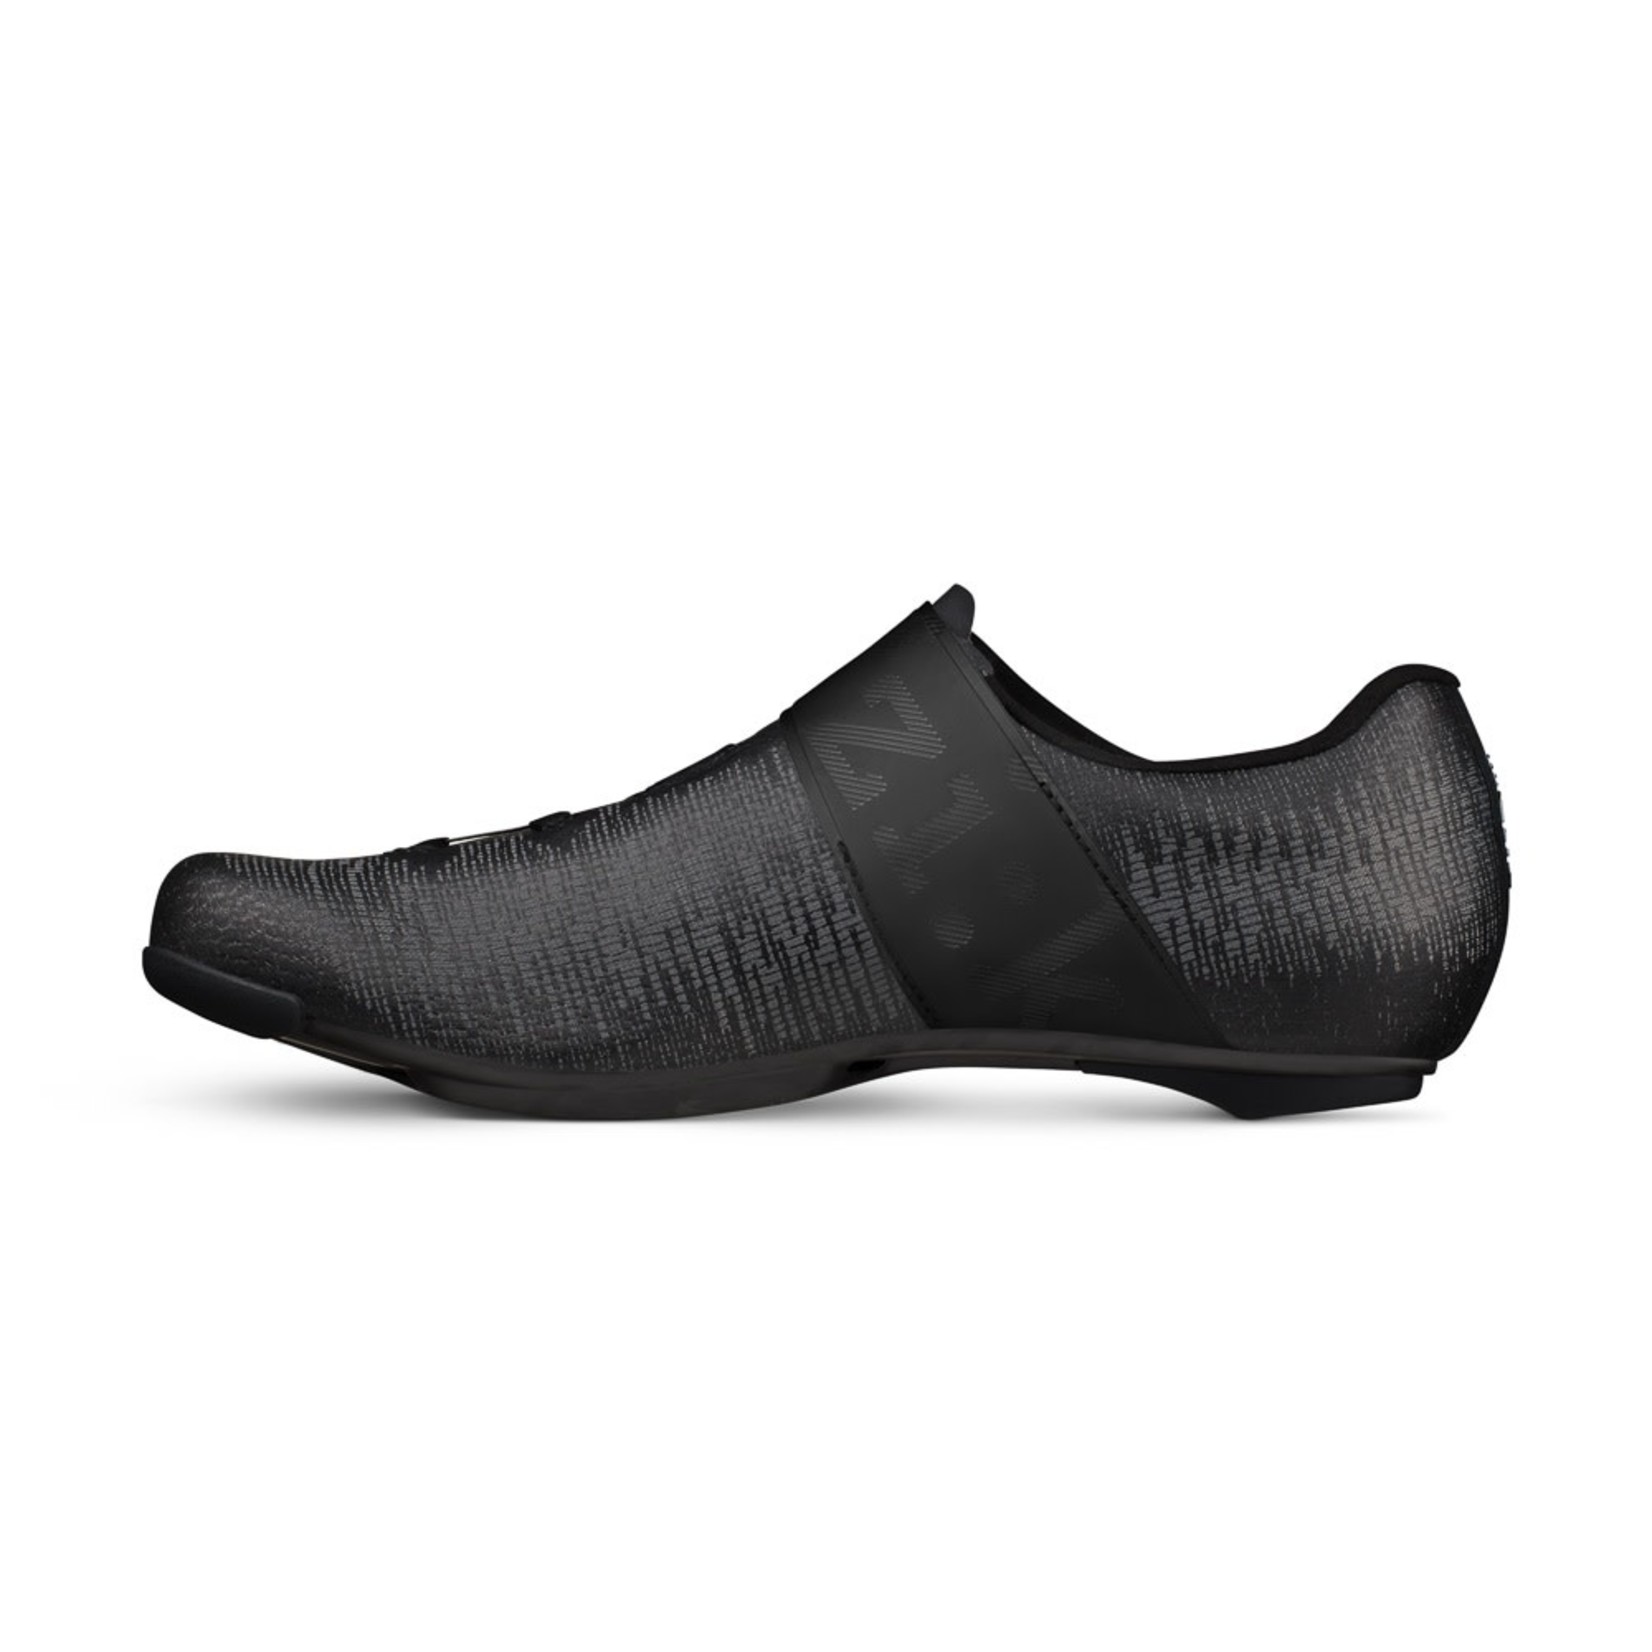 Fizik Fizik Vento Infinito Knit Full Carbon Road Bike/Cycling Shoes - Black/Black